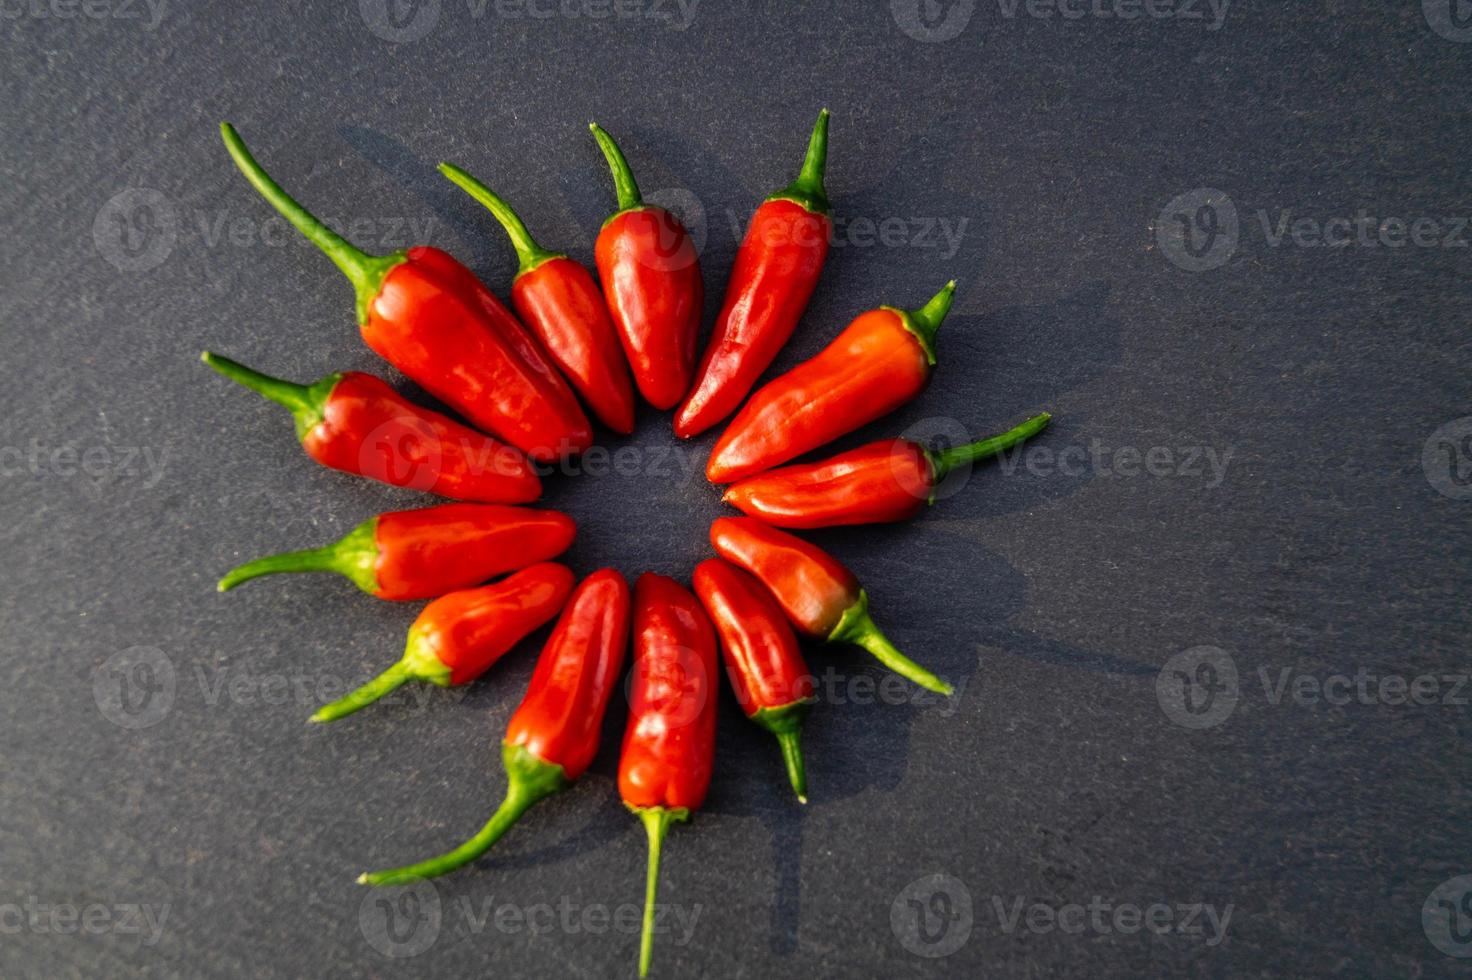 rode chili peper pittige groente foto